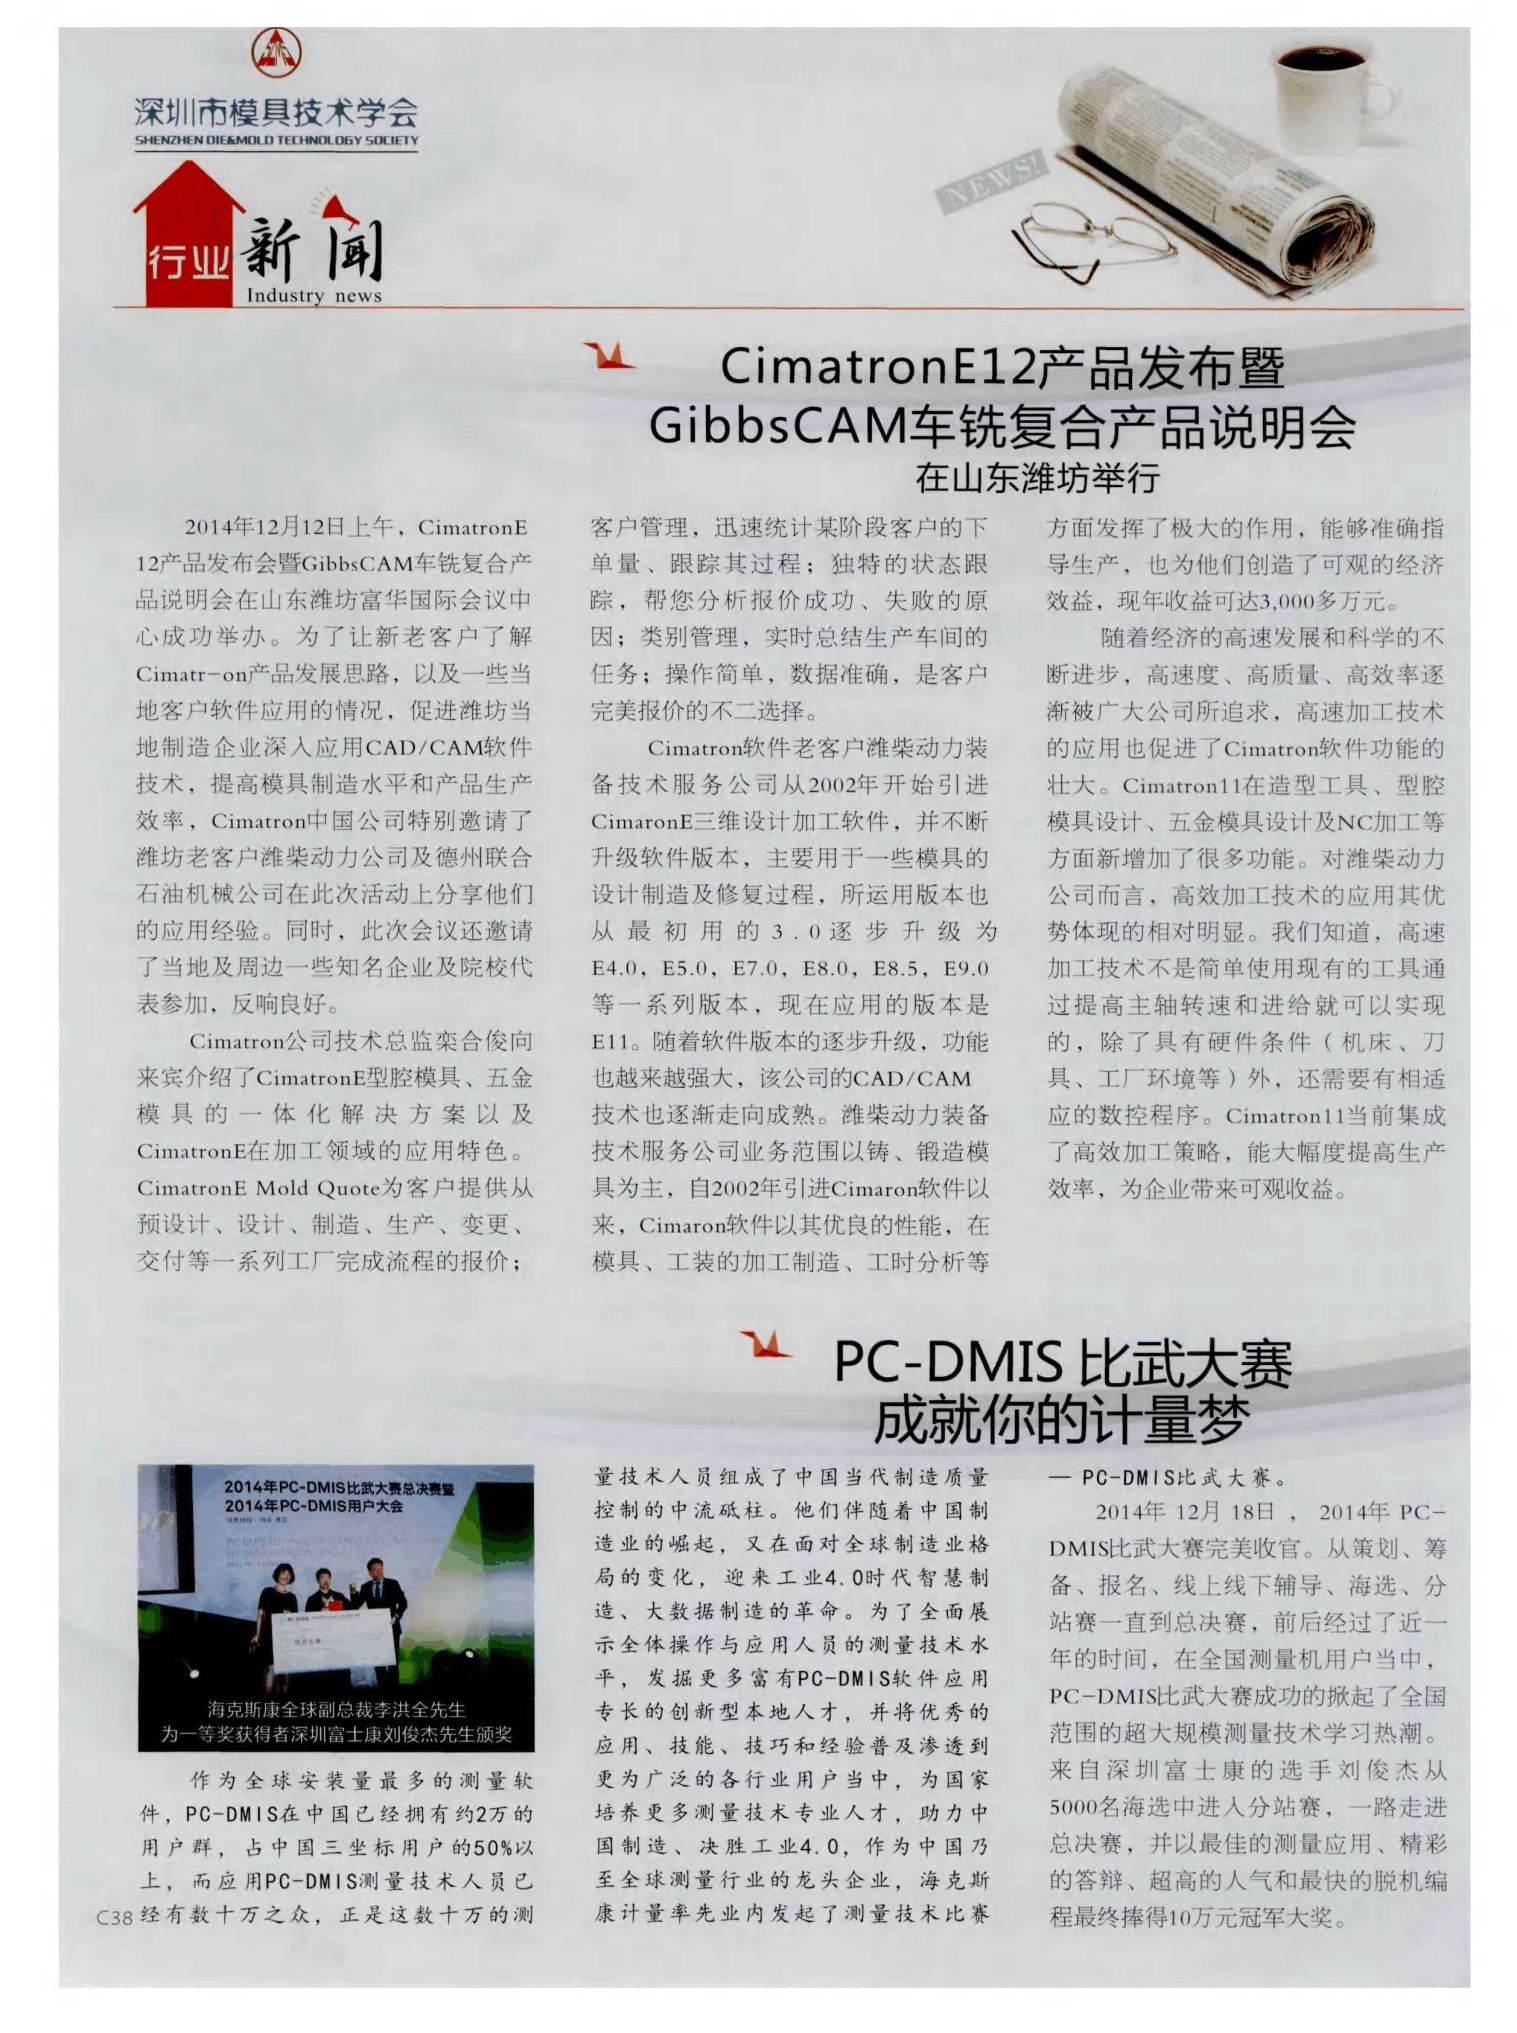 CimatronE12产品发布暨GibbsCAM车铣复合产品说明会在山东潍坊举行